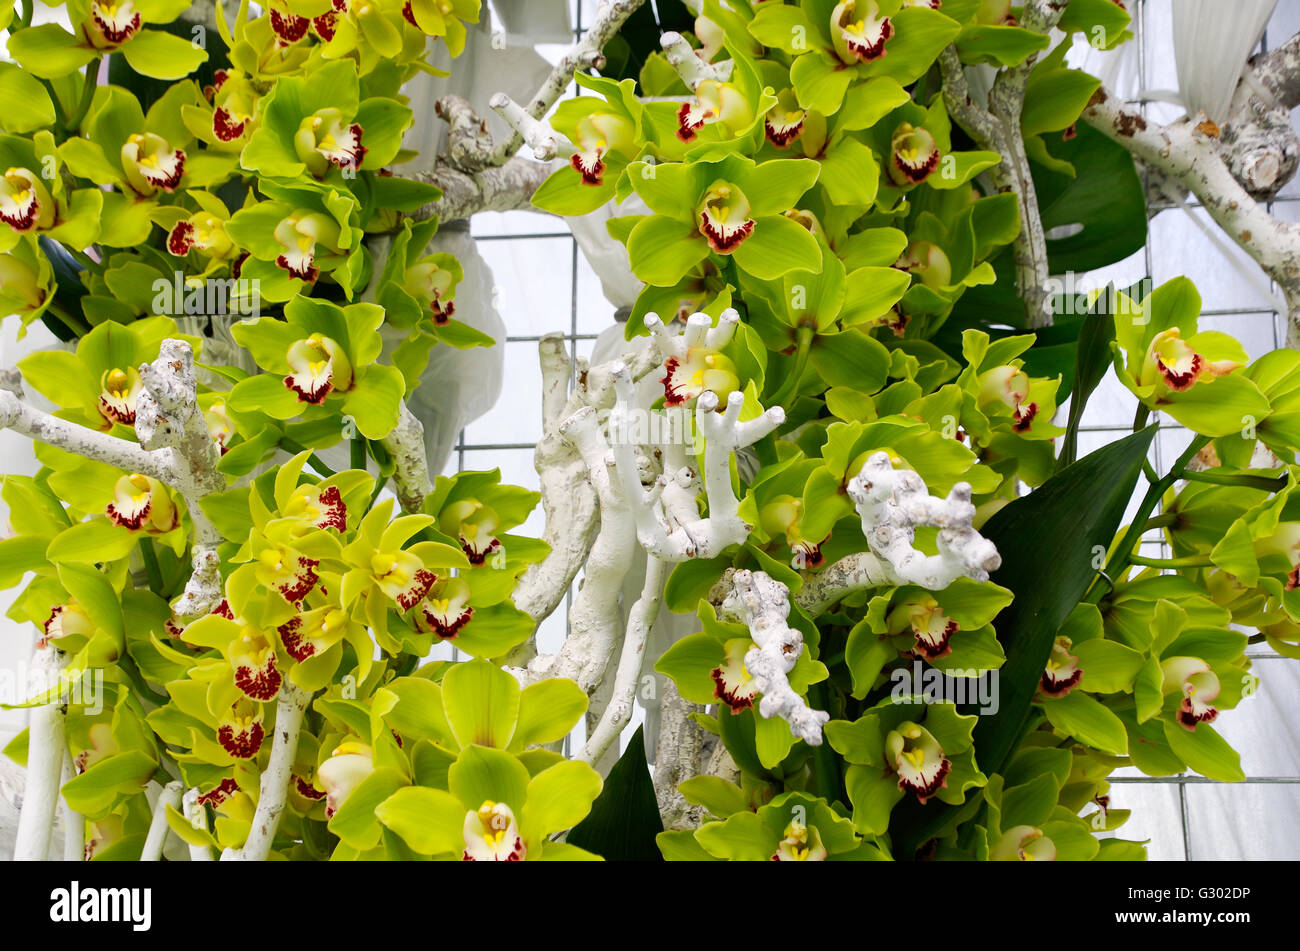 Orquideas verdes cymbidium fotografías e imágenes de alta resolución - Alamy